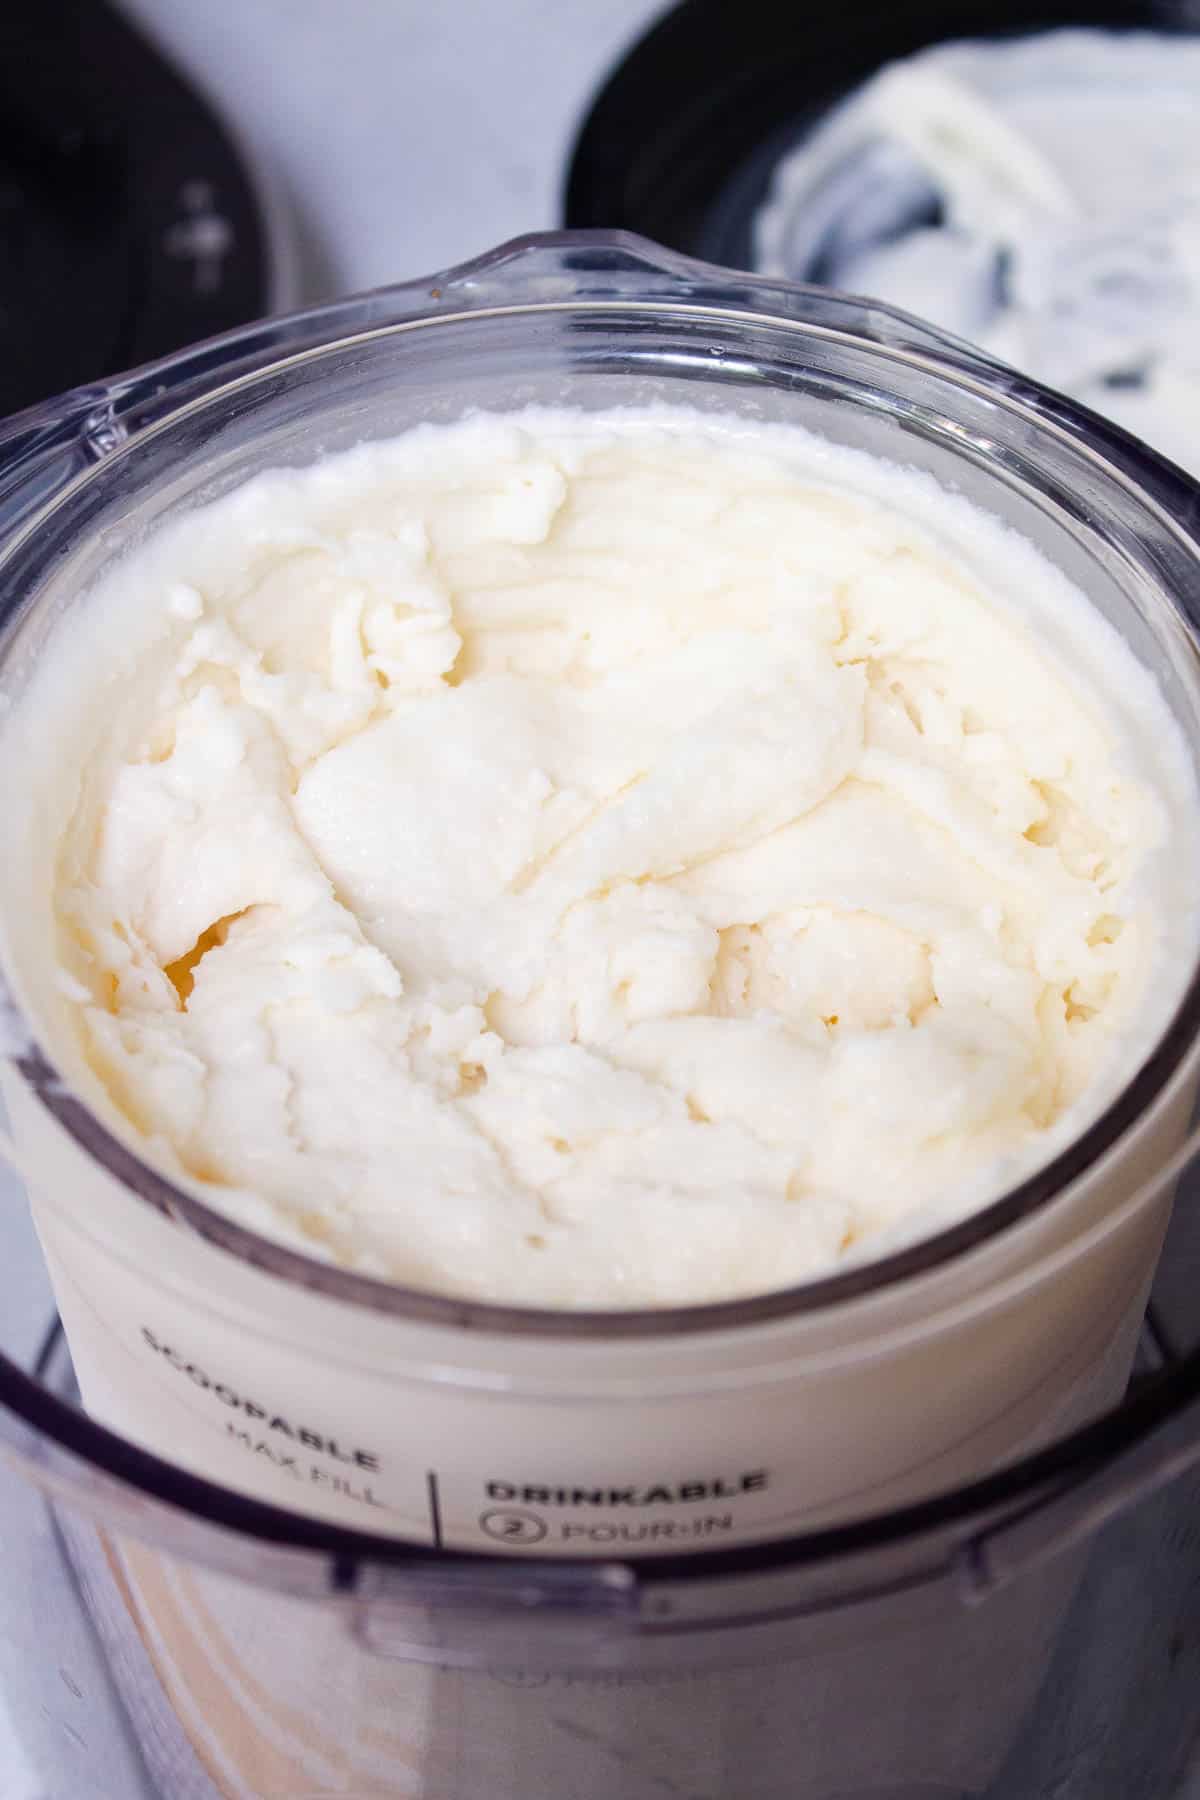 The processed vanilla ice cream has a creamy texture